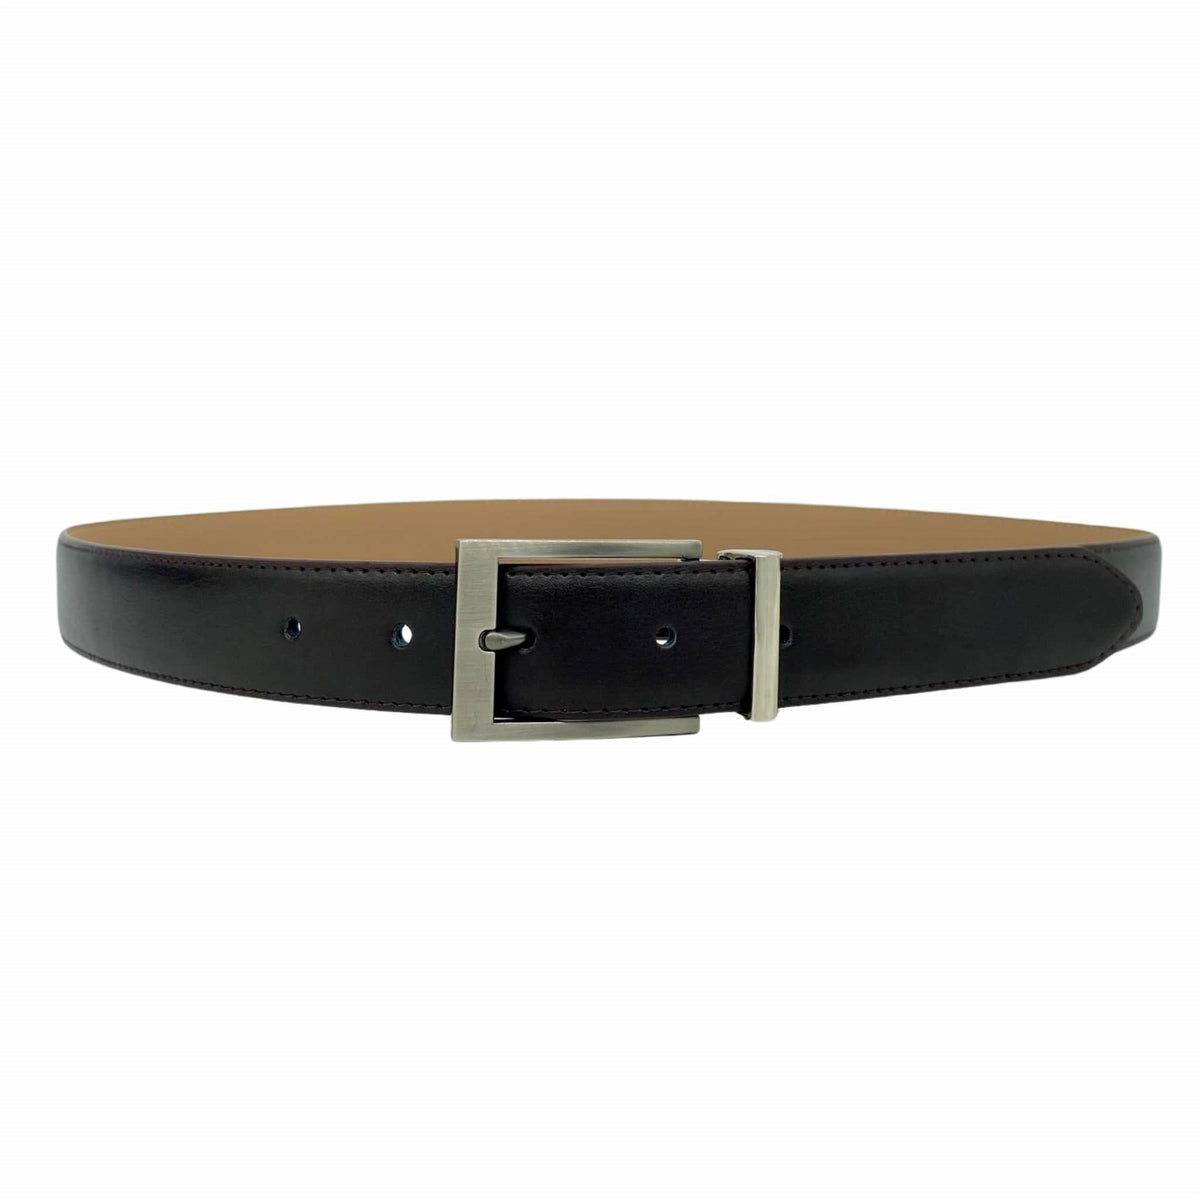 FLORIDA Tan Leather Belt - Men's Belts Australia